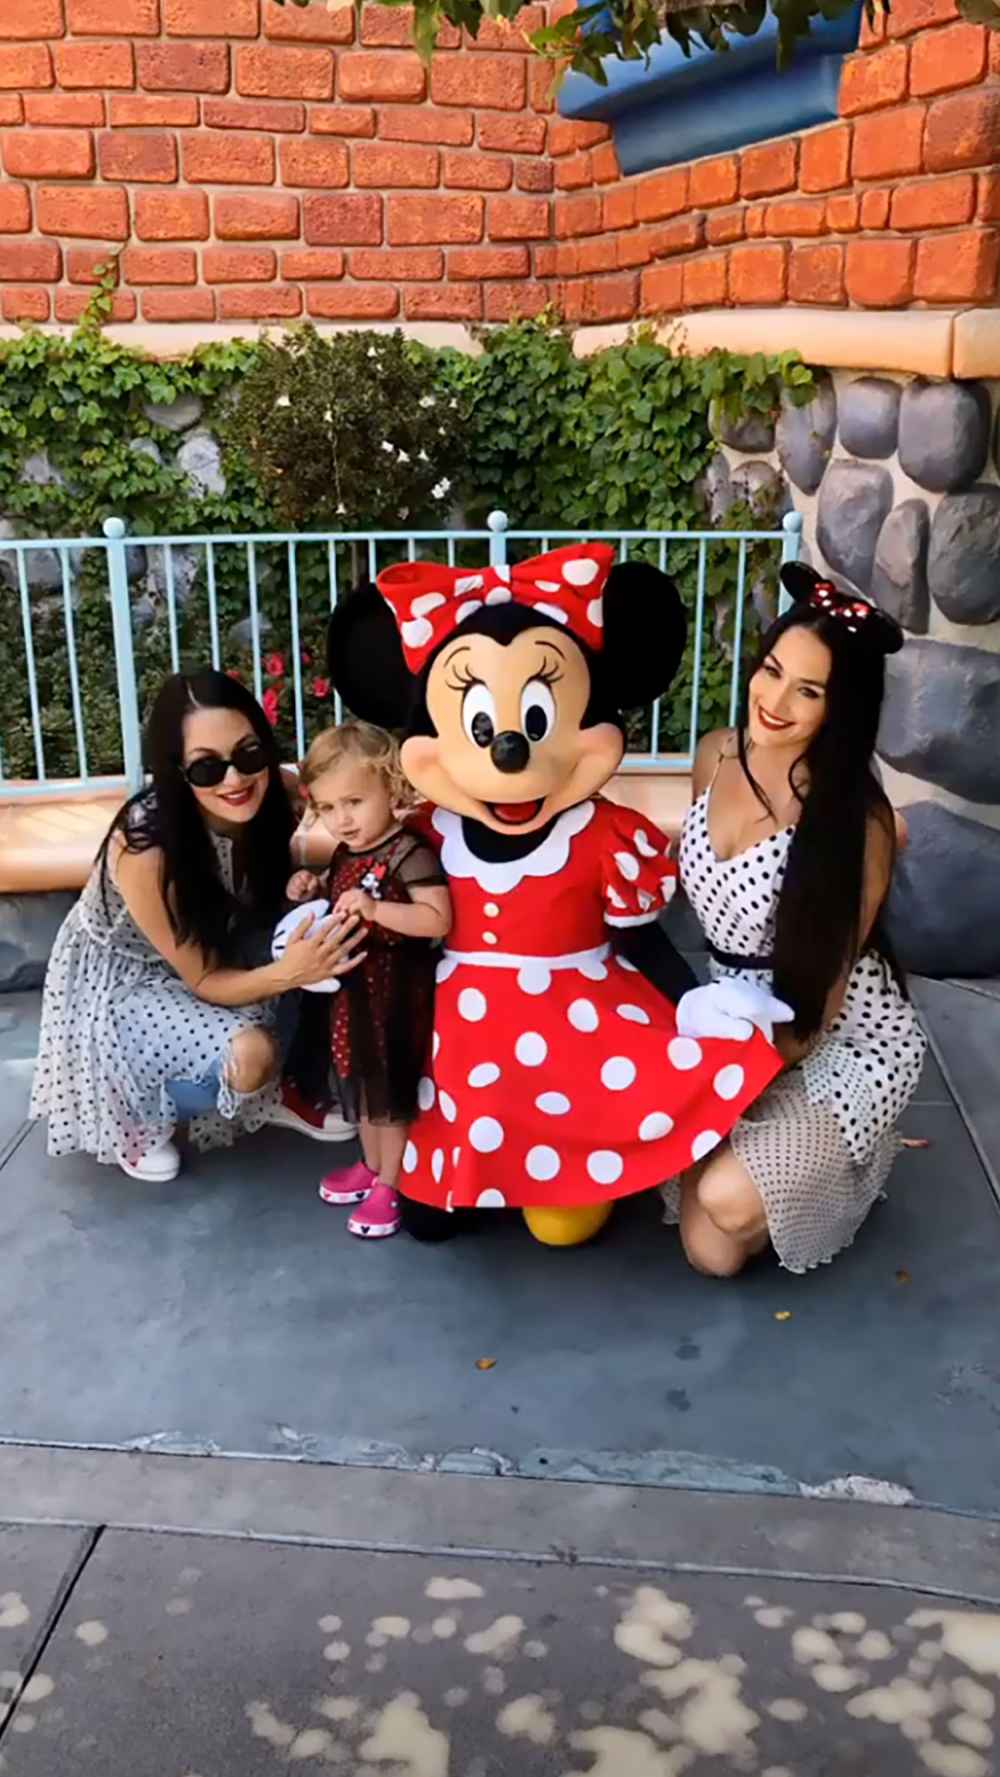 Nikki Bella and Artem Chigvintsev Double Date With Brie Bella at Disneyland